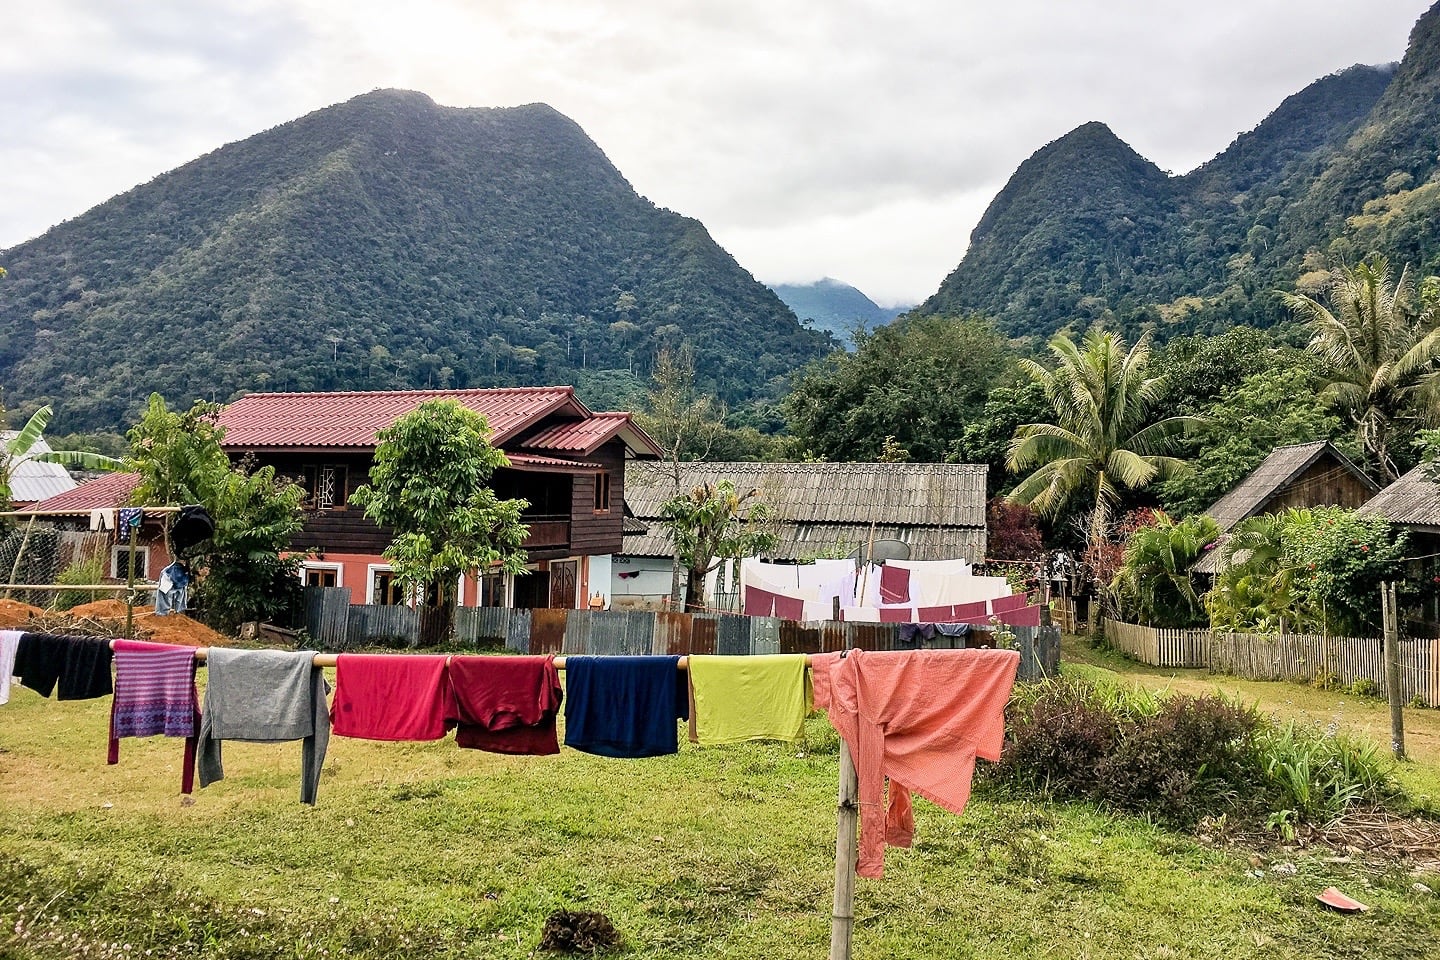 clothes drying in the sun in Muang Ngoi Neua Laos